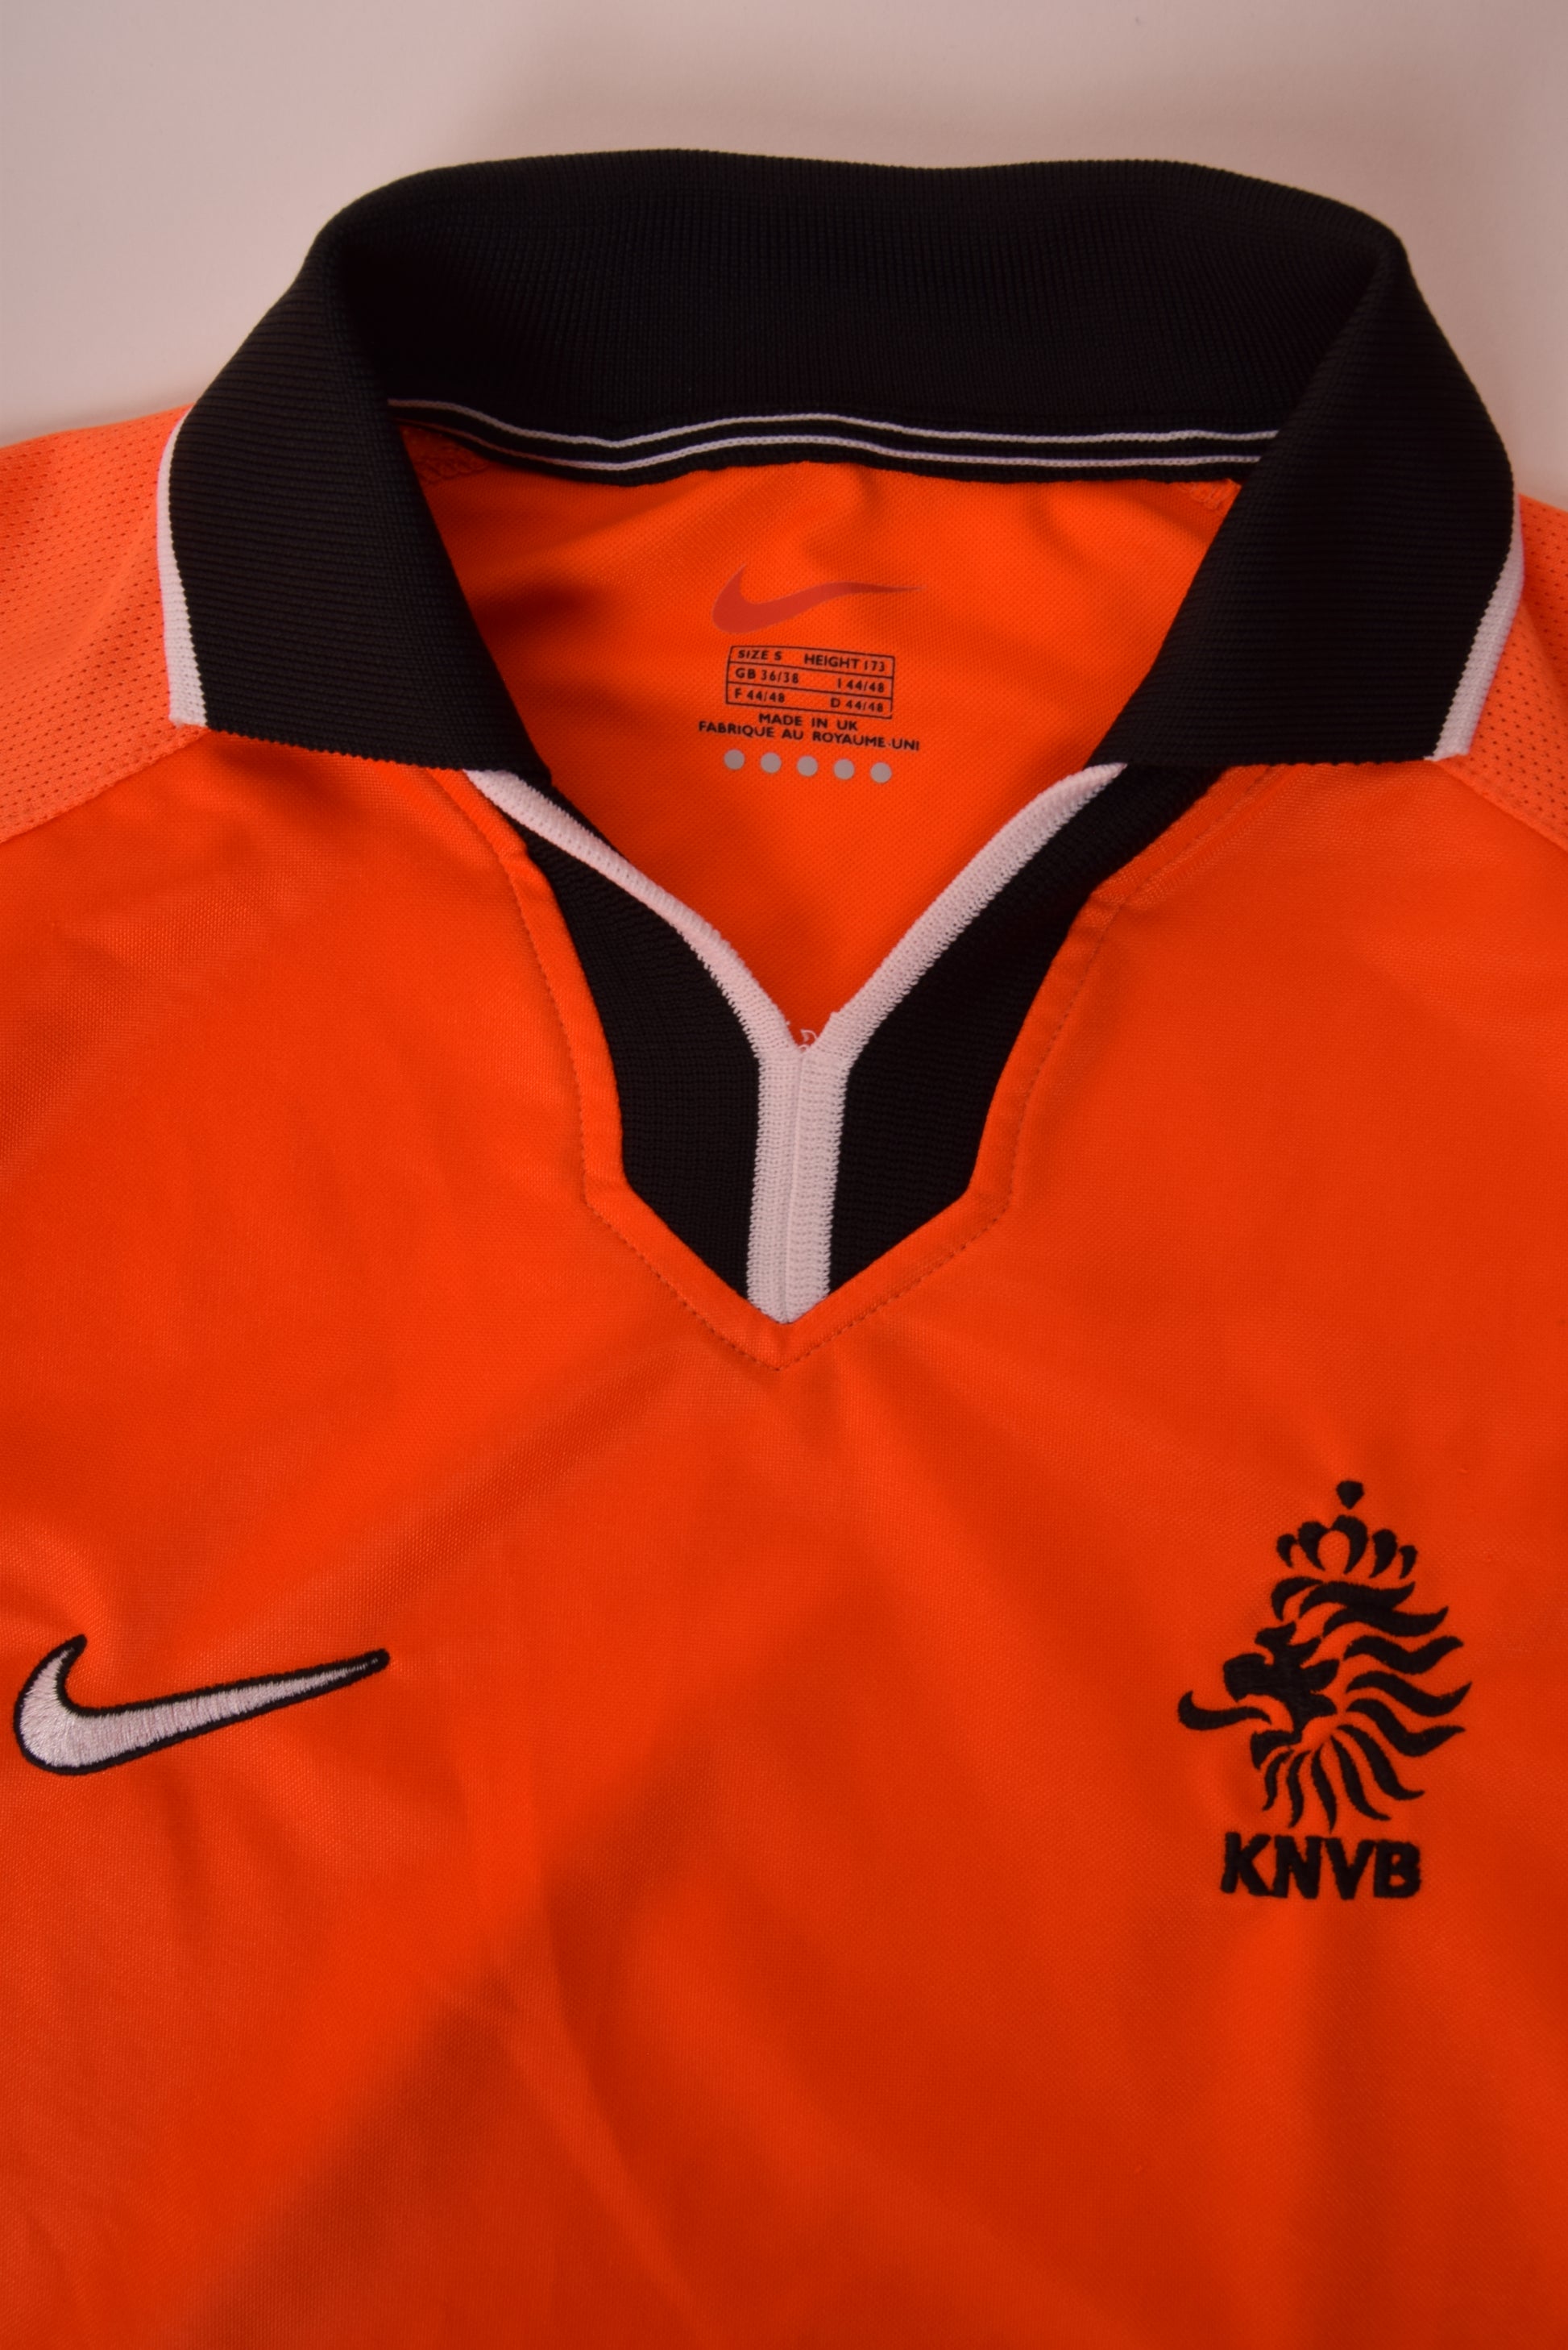 Vintage Holland Netherlands Nike 1998-1999 Home Football Shirt Orange Size S Made in UK